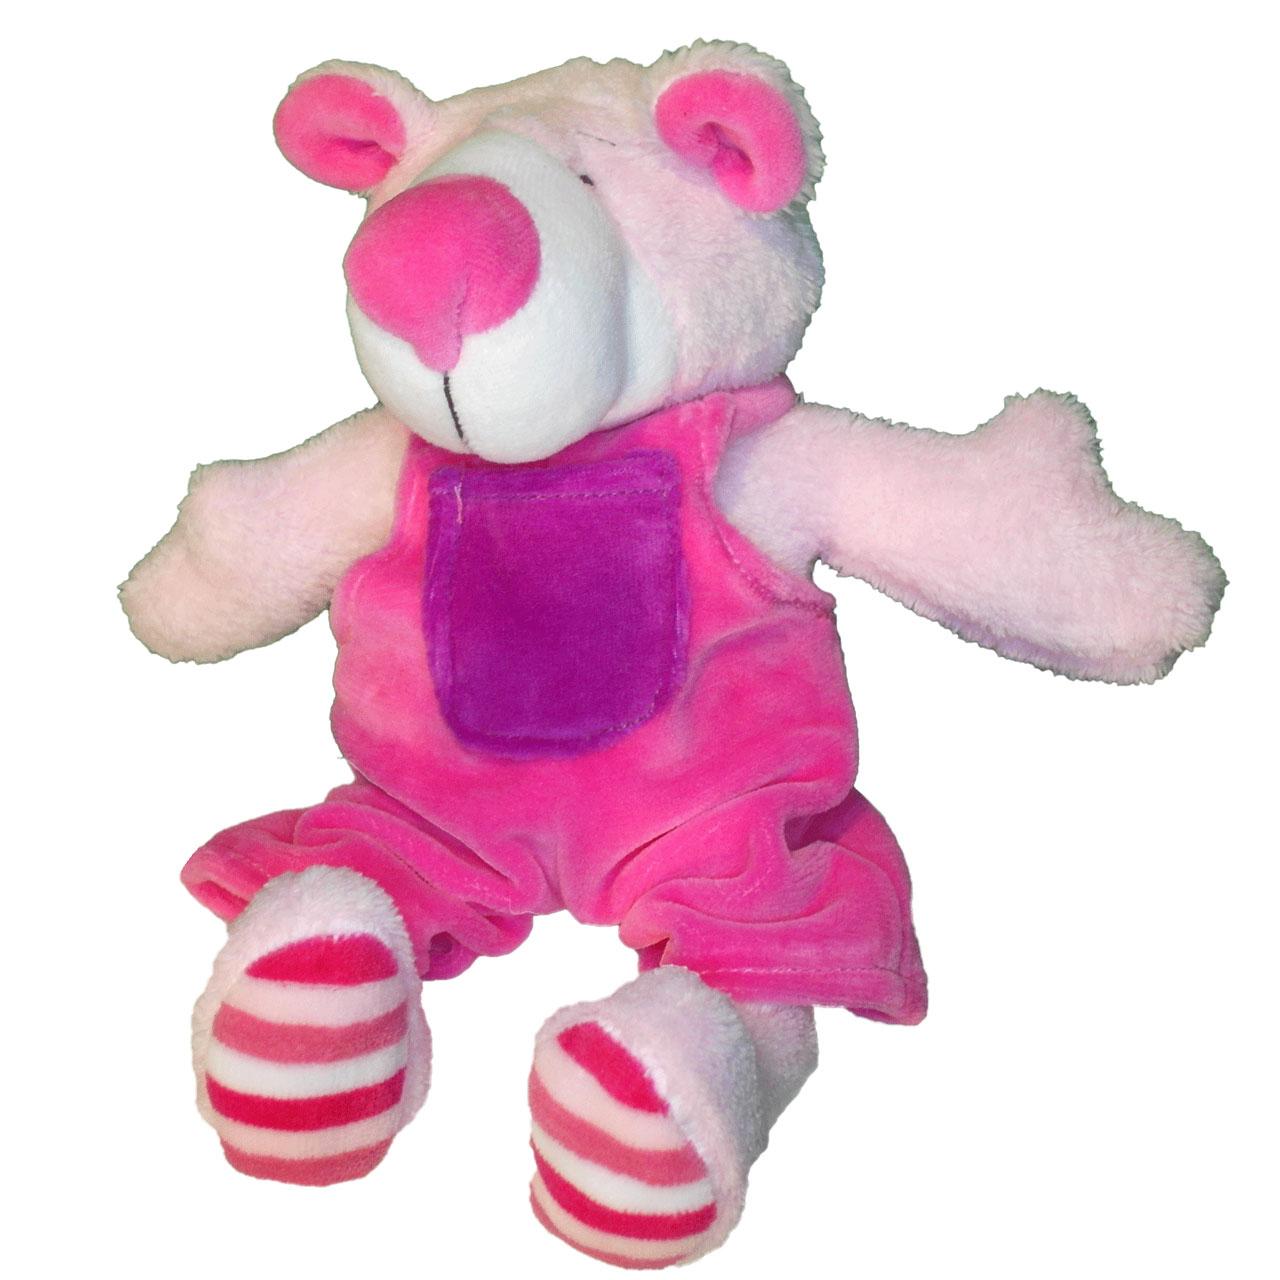 Cuddly toy bear pink